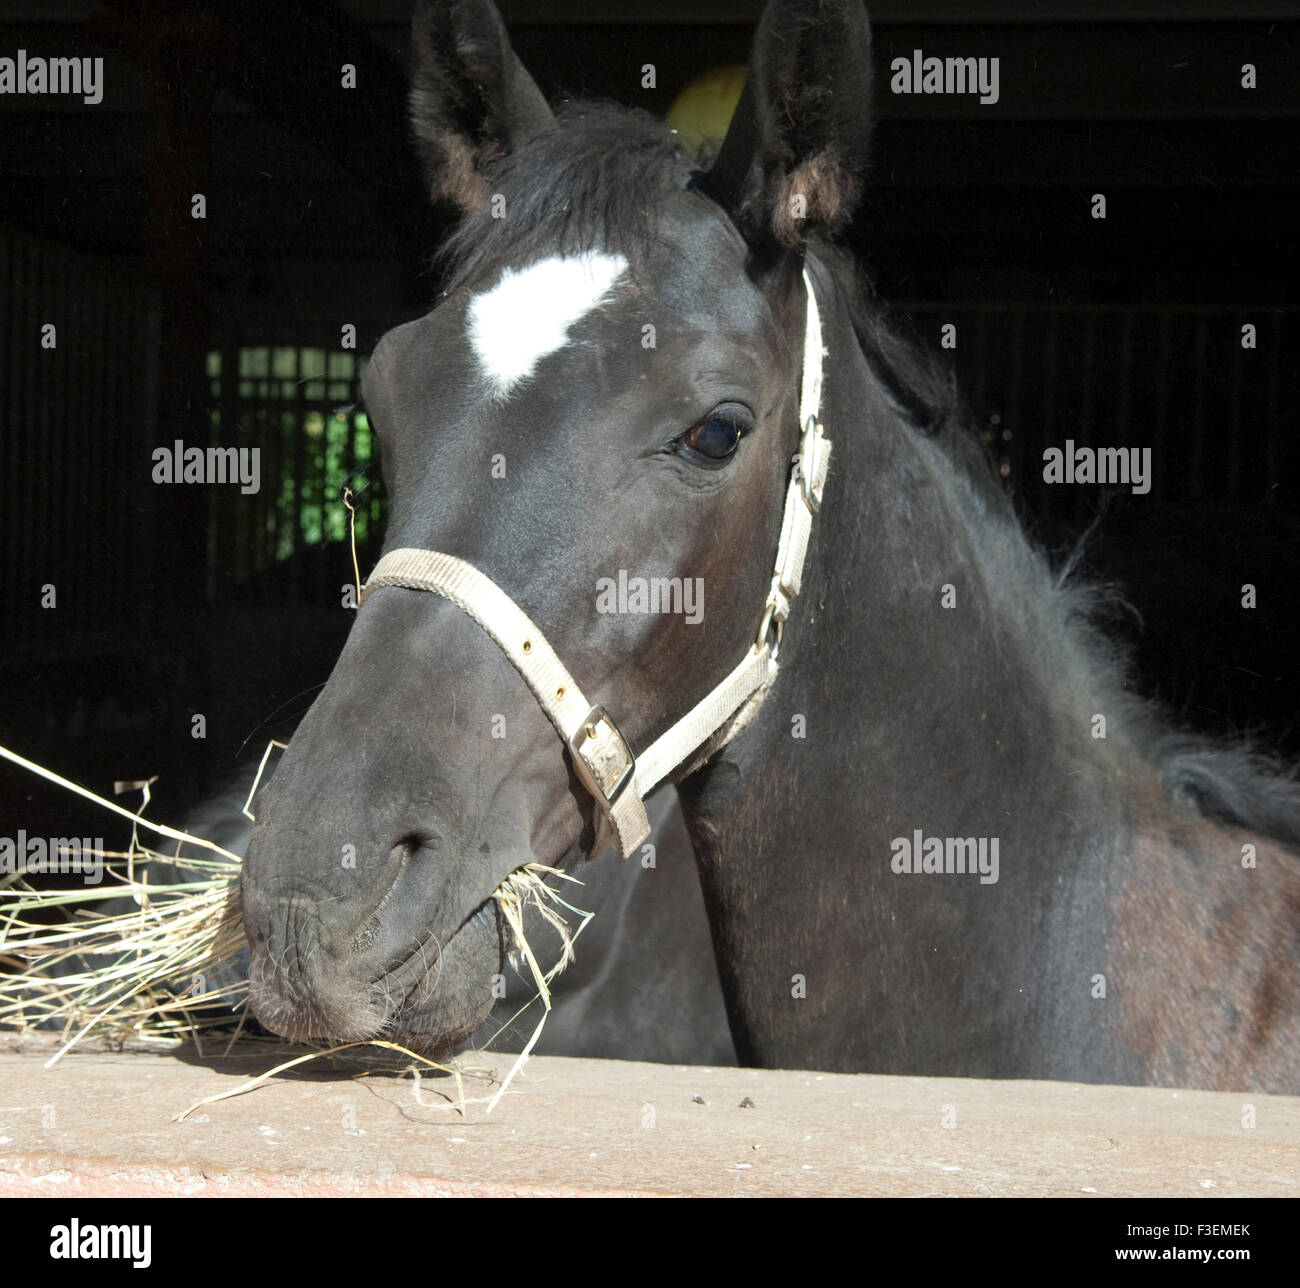 Pferd France ; Pferdekopf ; décrochage ; Banque D'Images